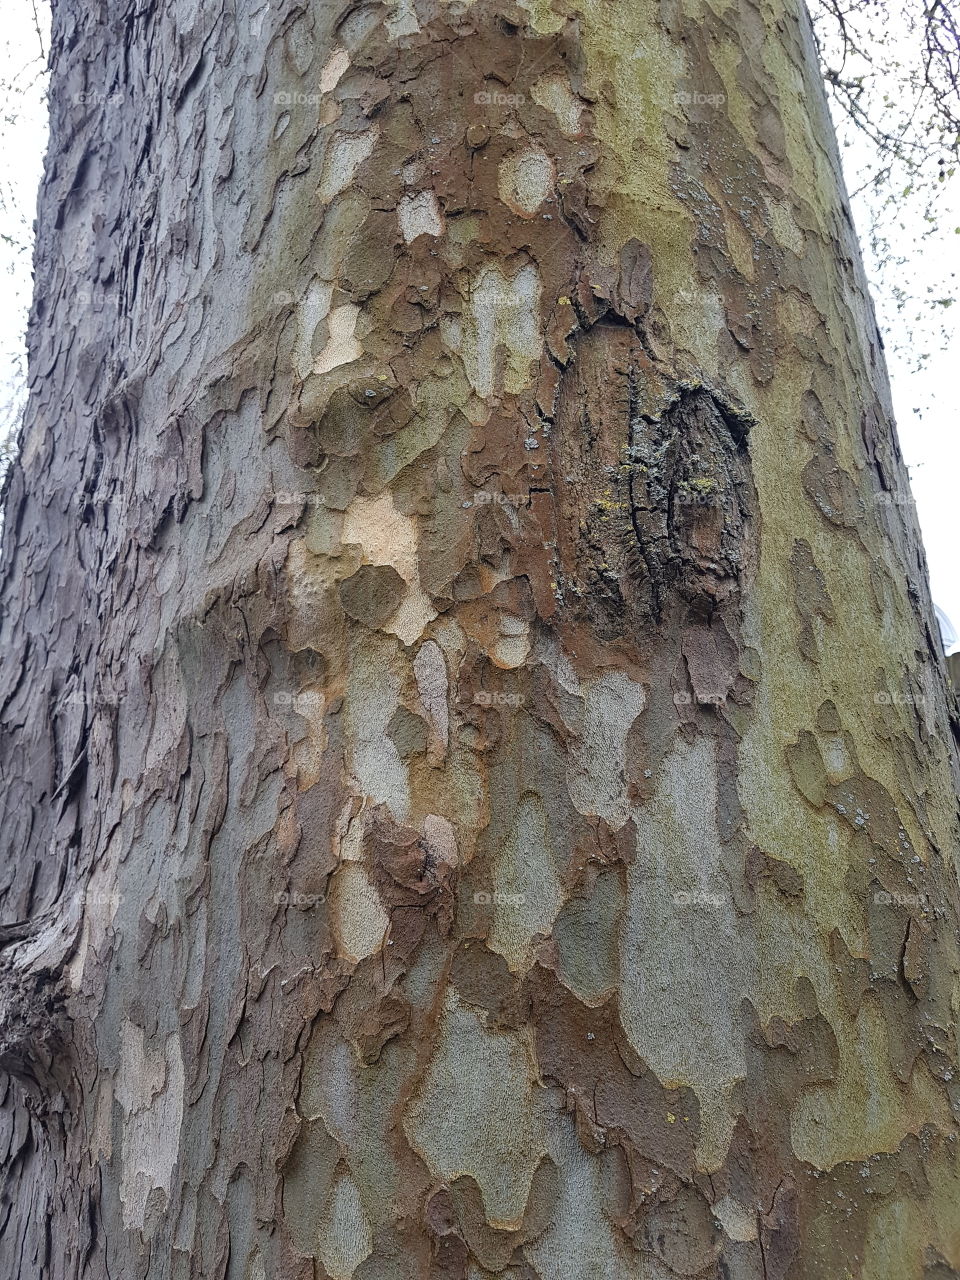 Camouflage bark